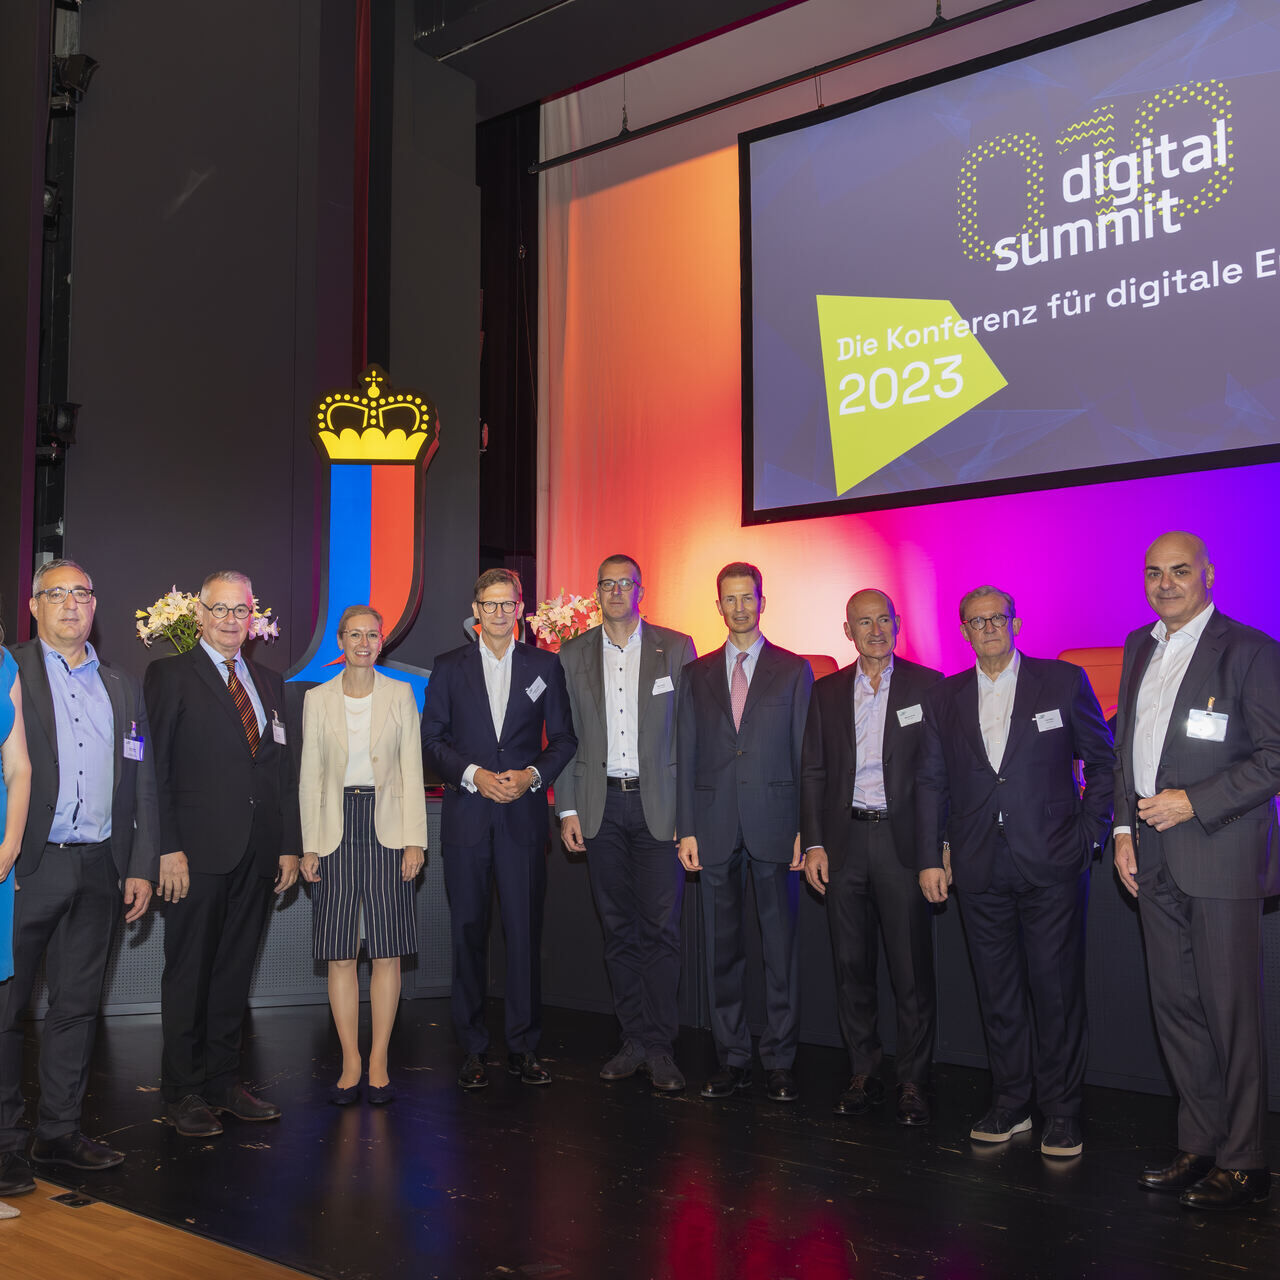 Digital Summit 2023: 主催者と講演者